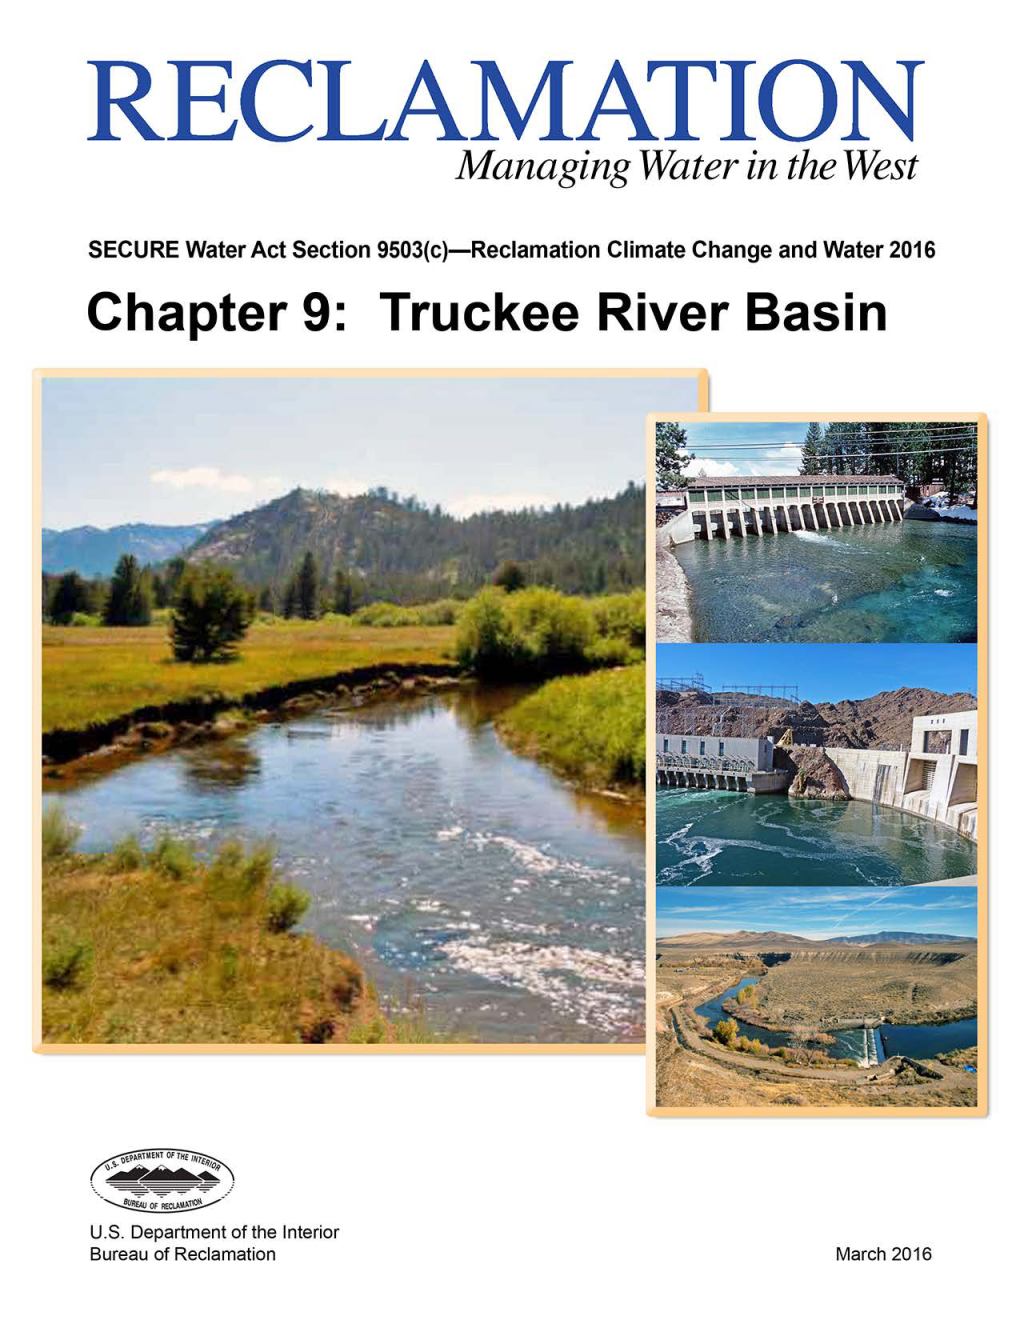 Truckee River Basin